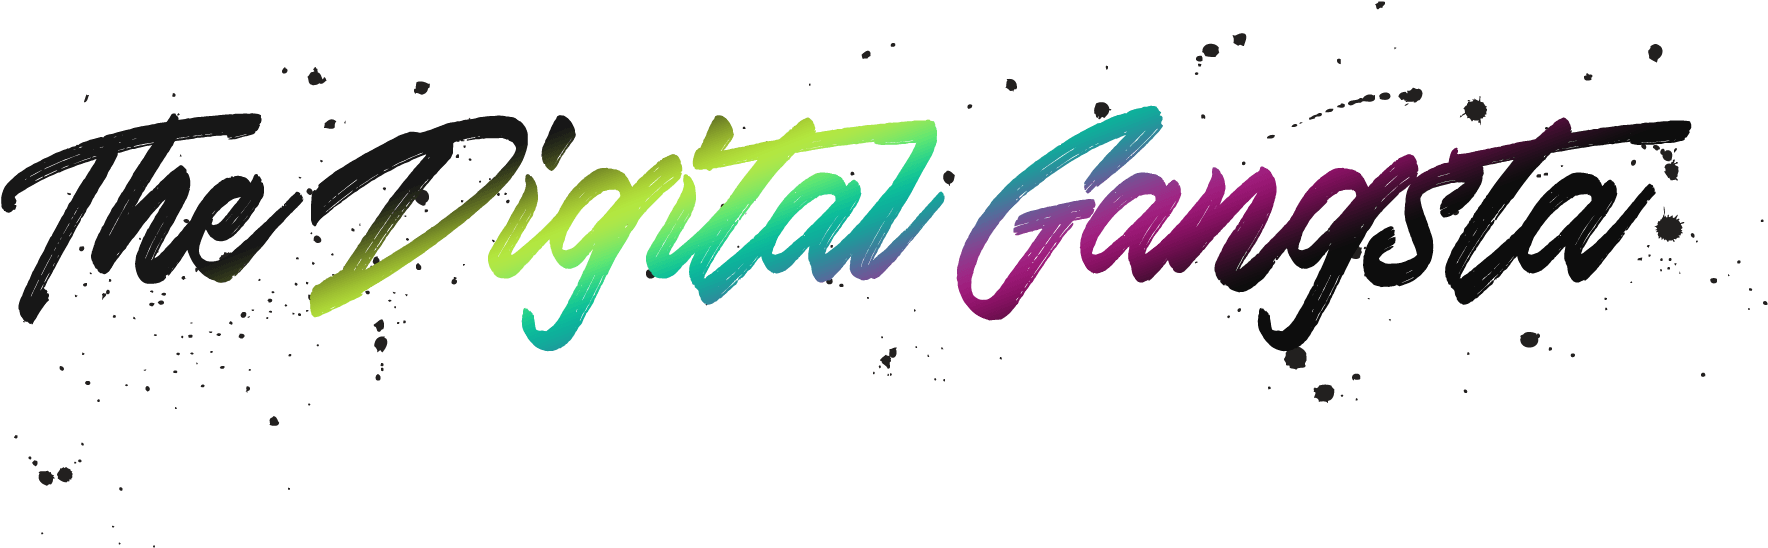 The Digital Gangsta Logo PNG